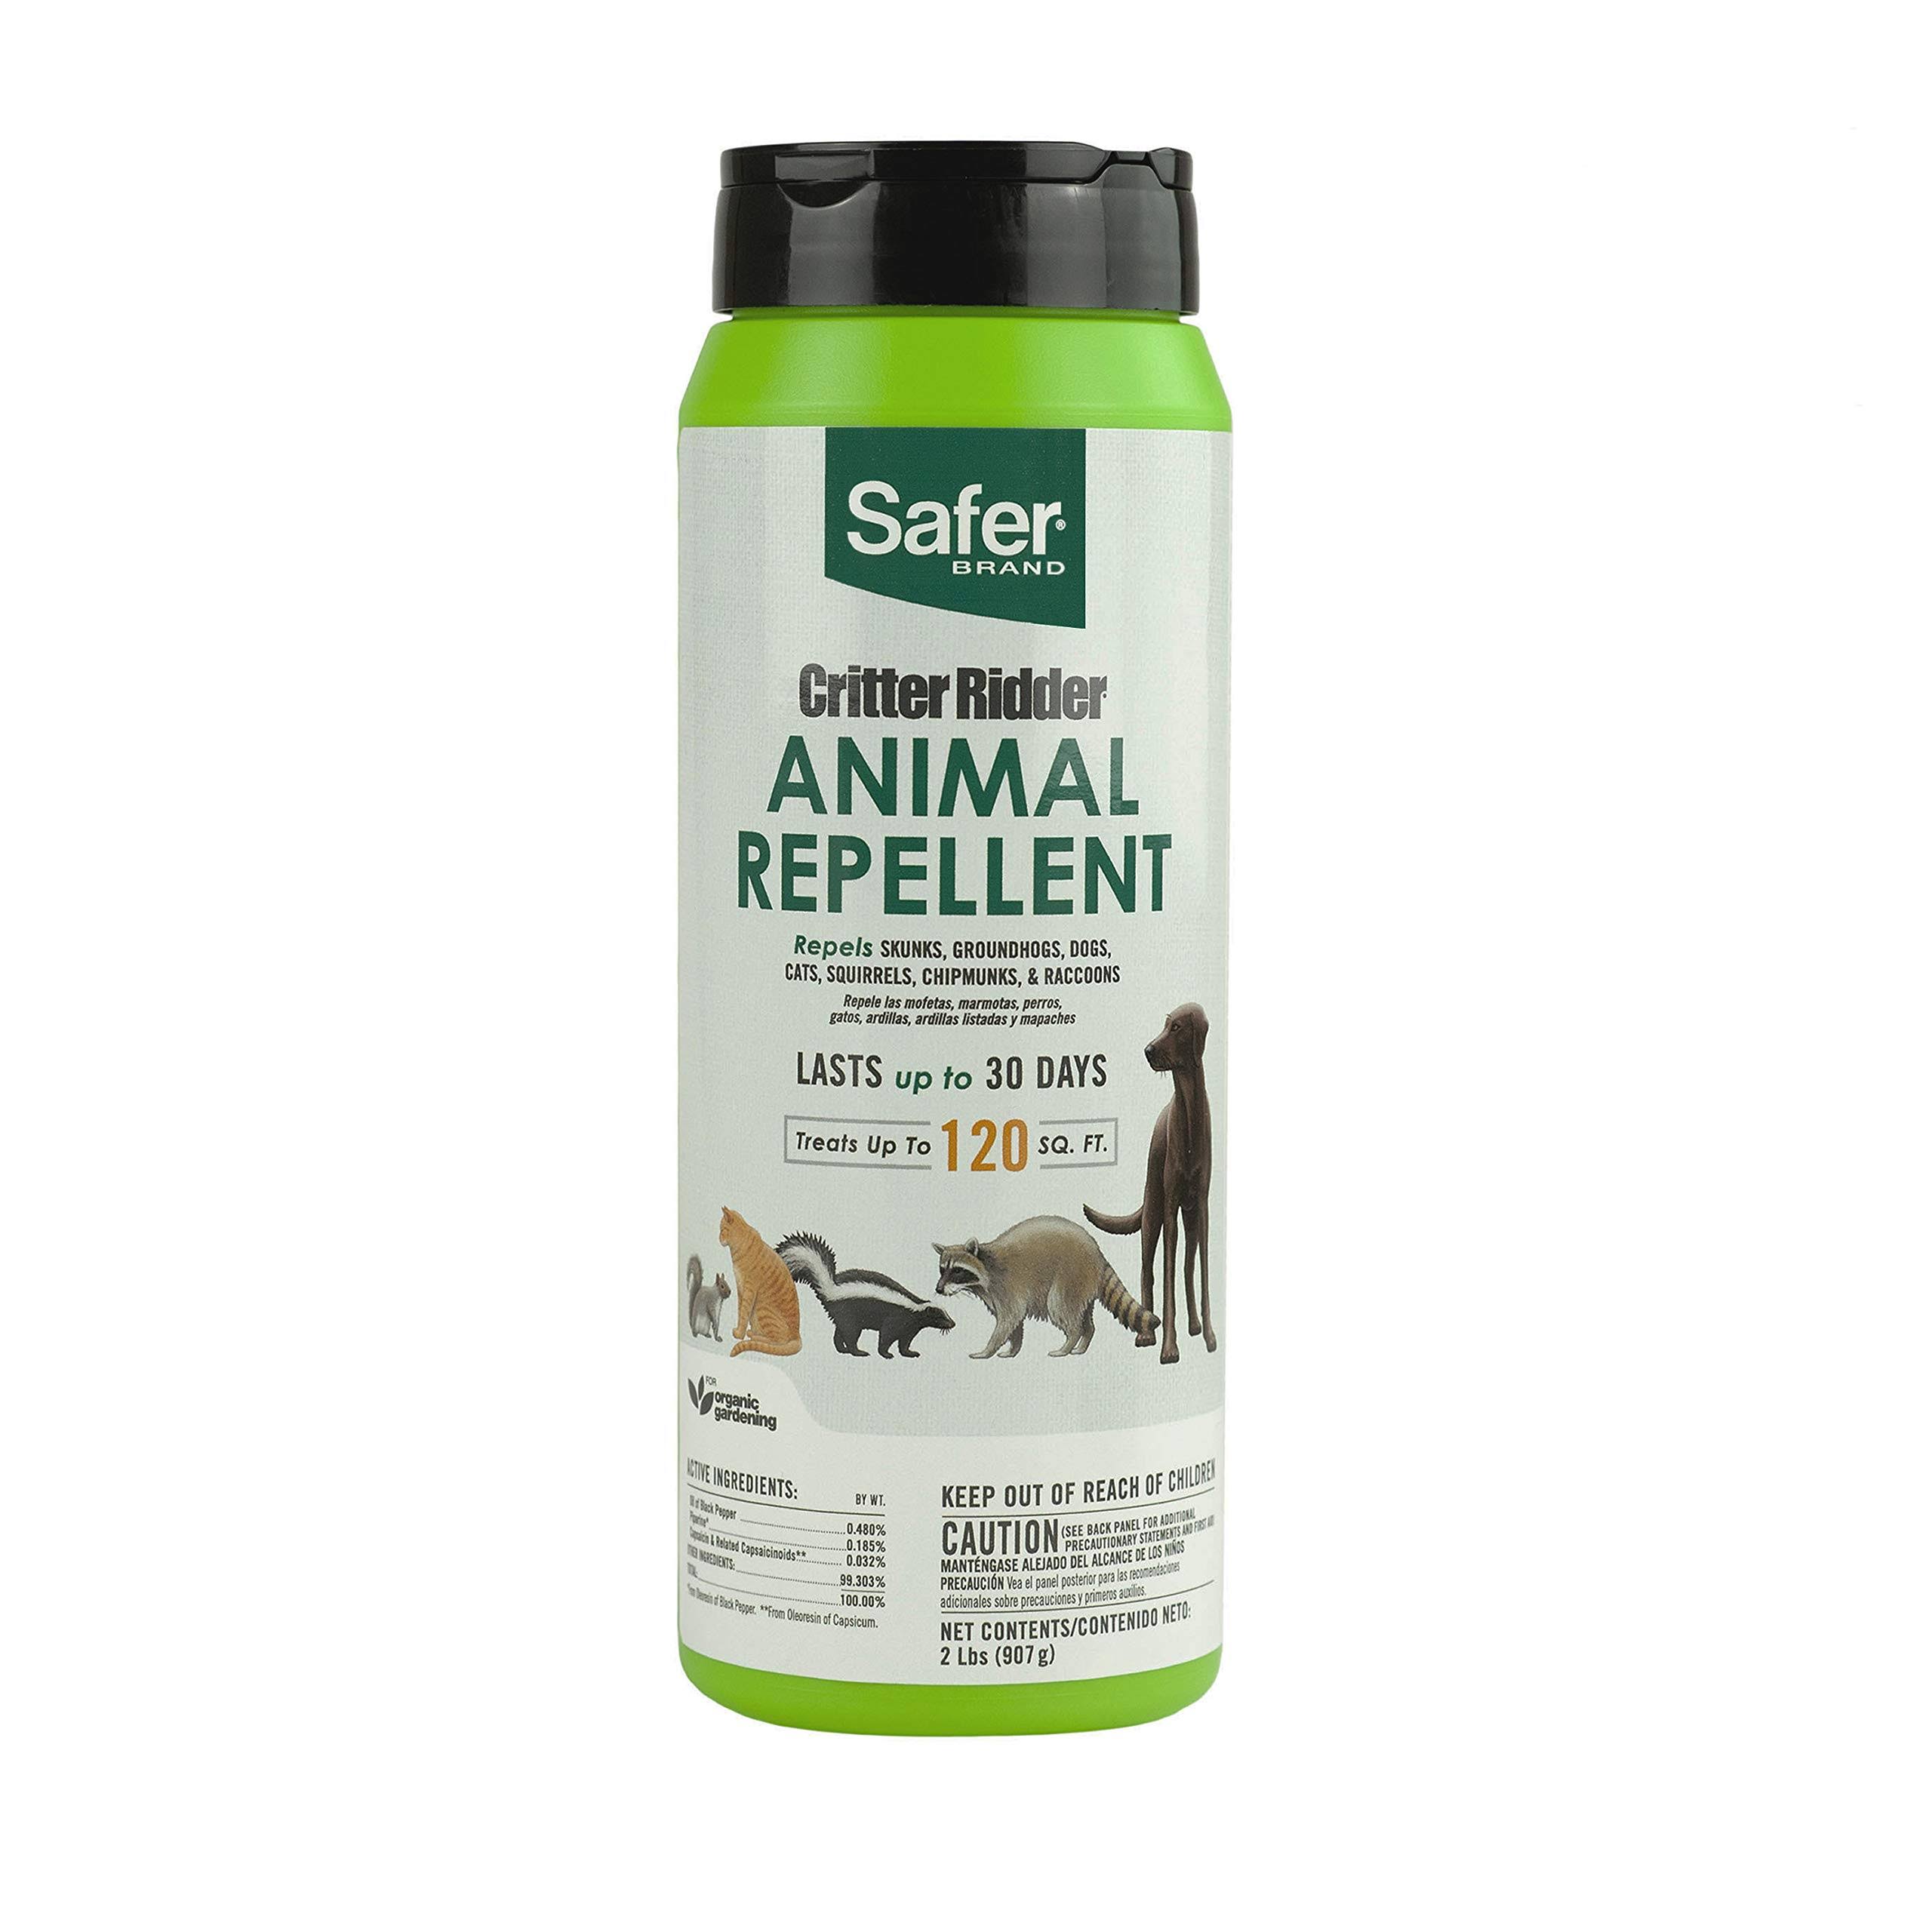 Safer Critter Ridder Animal Repellent - 2lbs